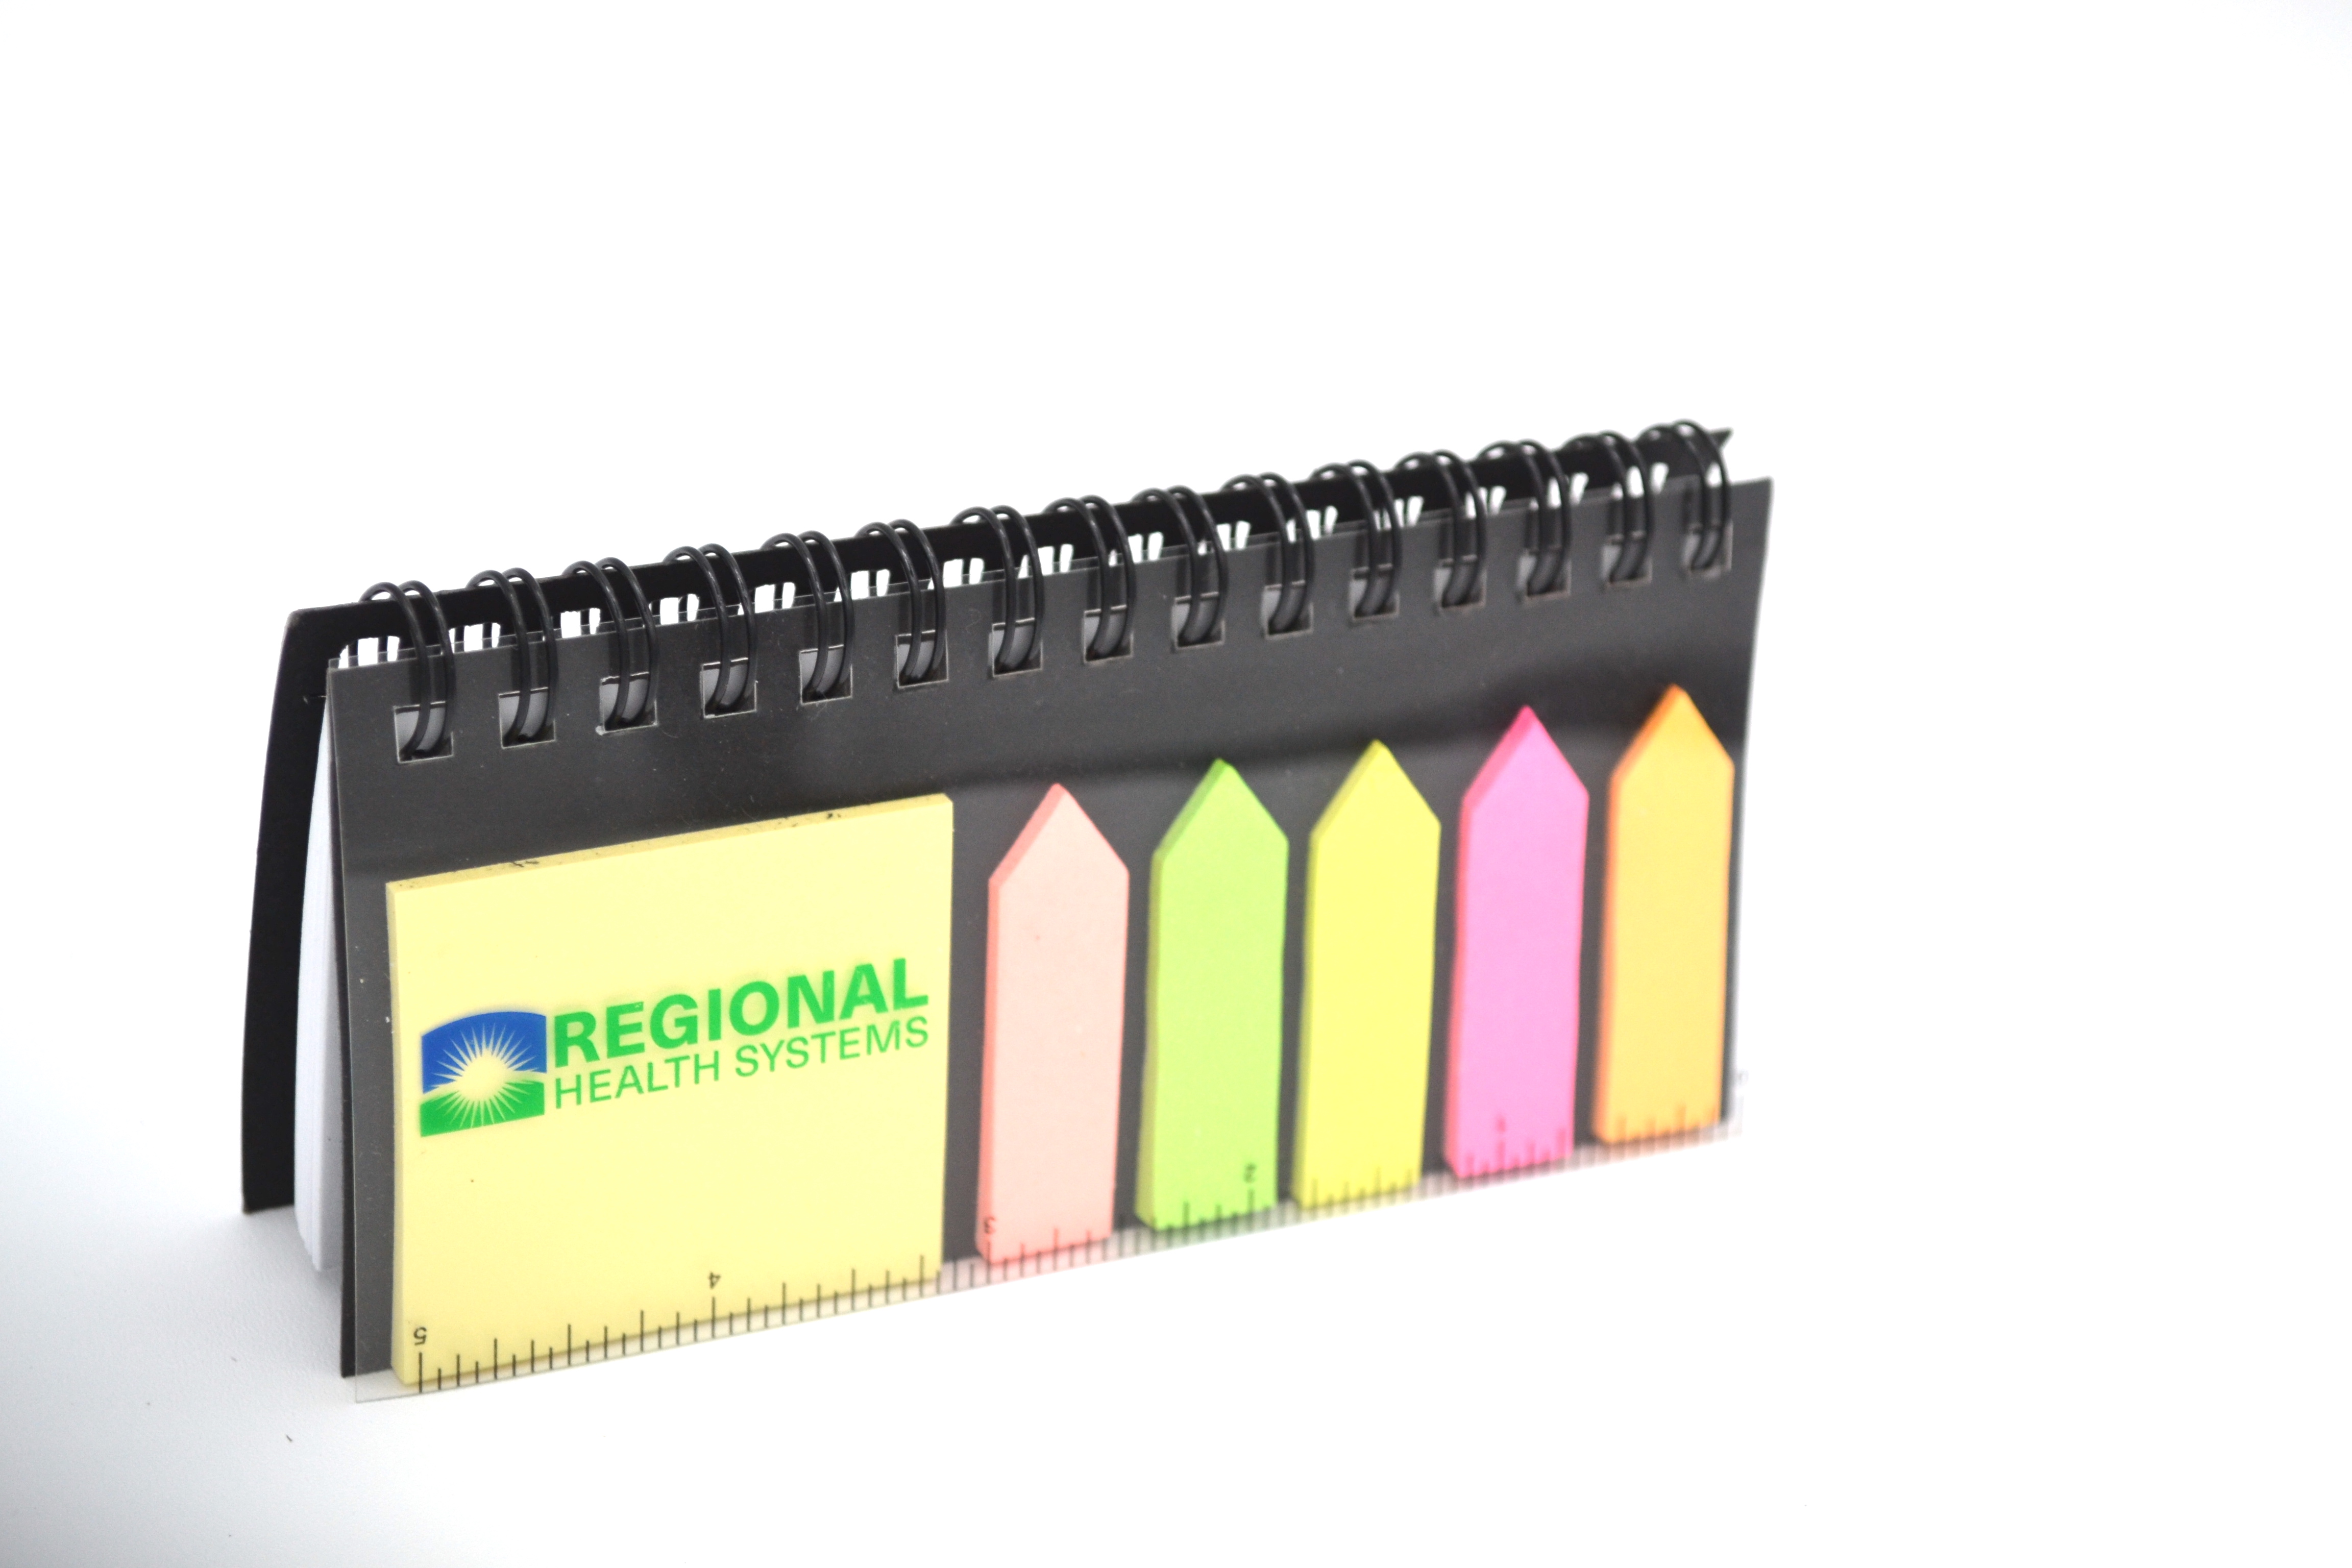  Regional Health Systems Sticky Note Notebook